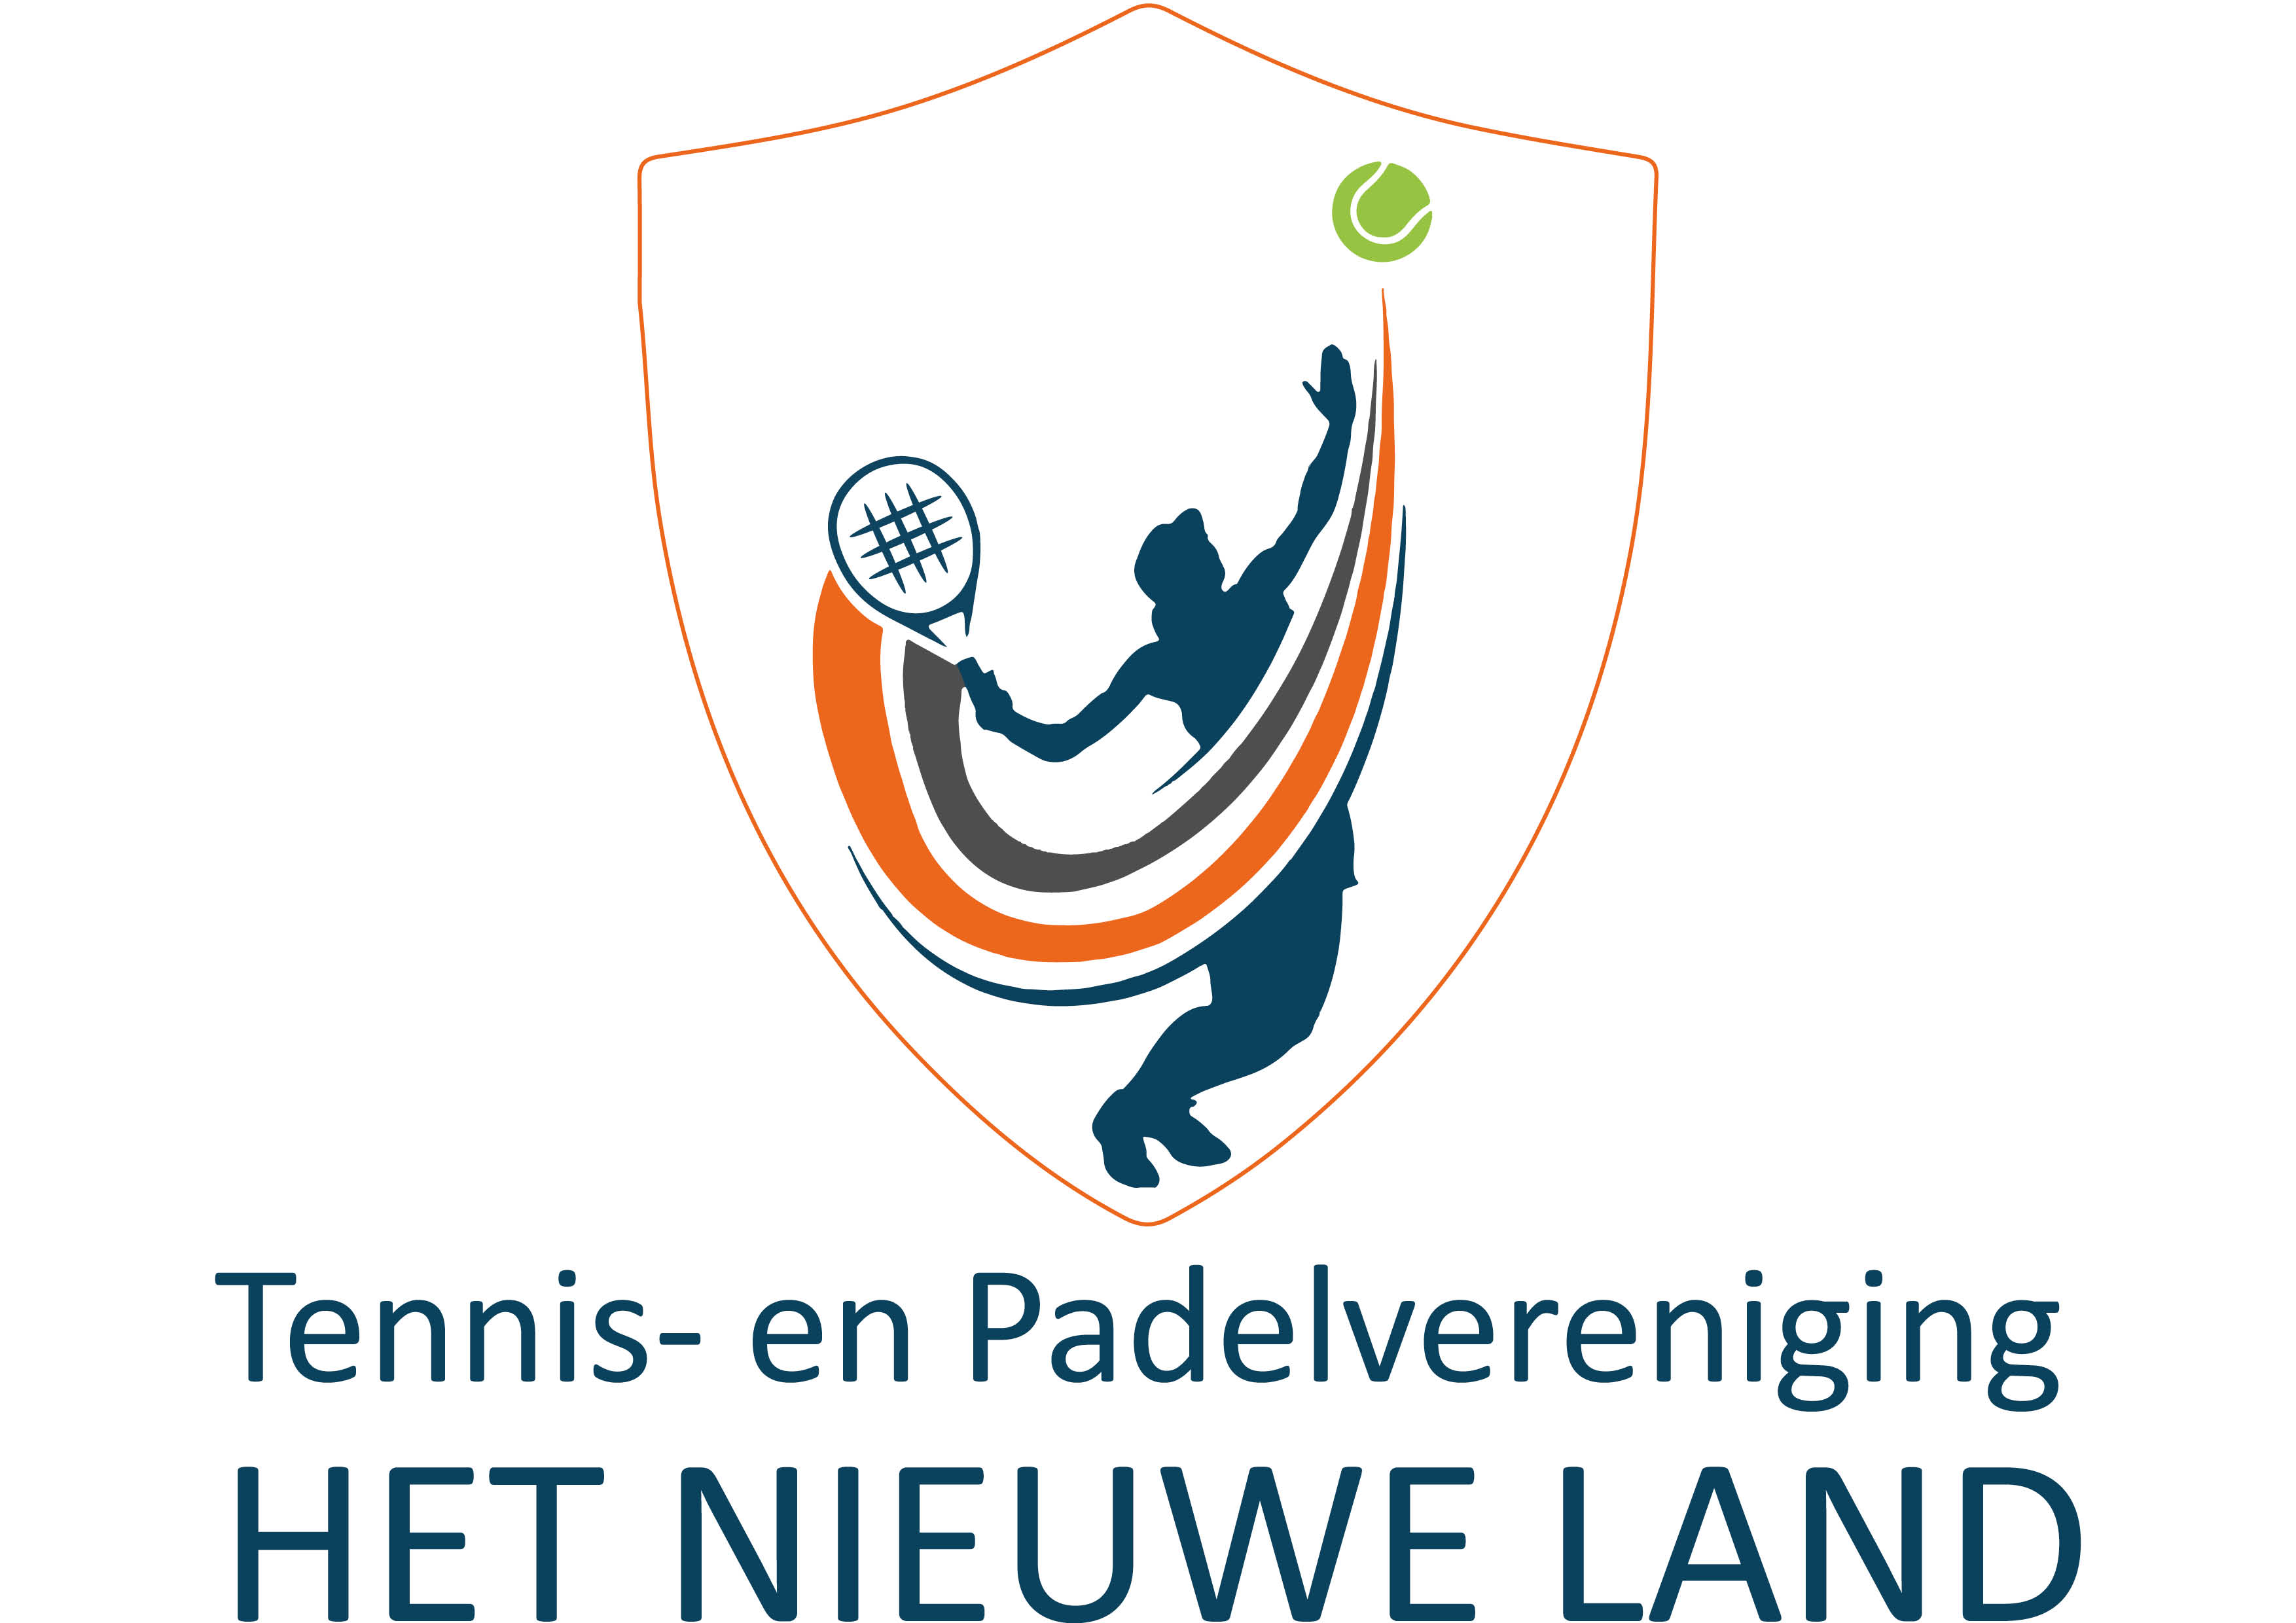 Profile image of venue TPV Het Nieuwe Land